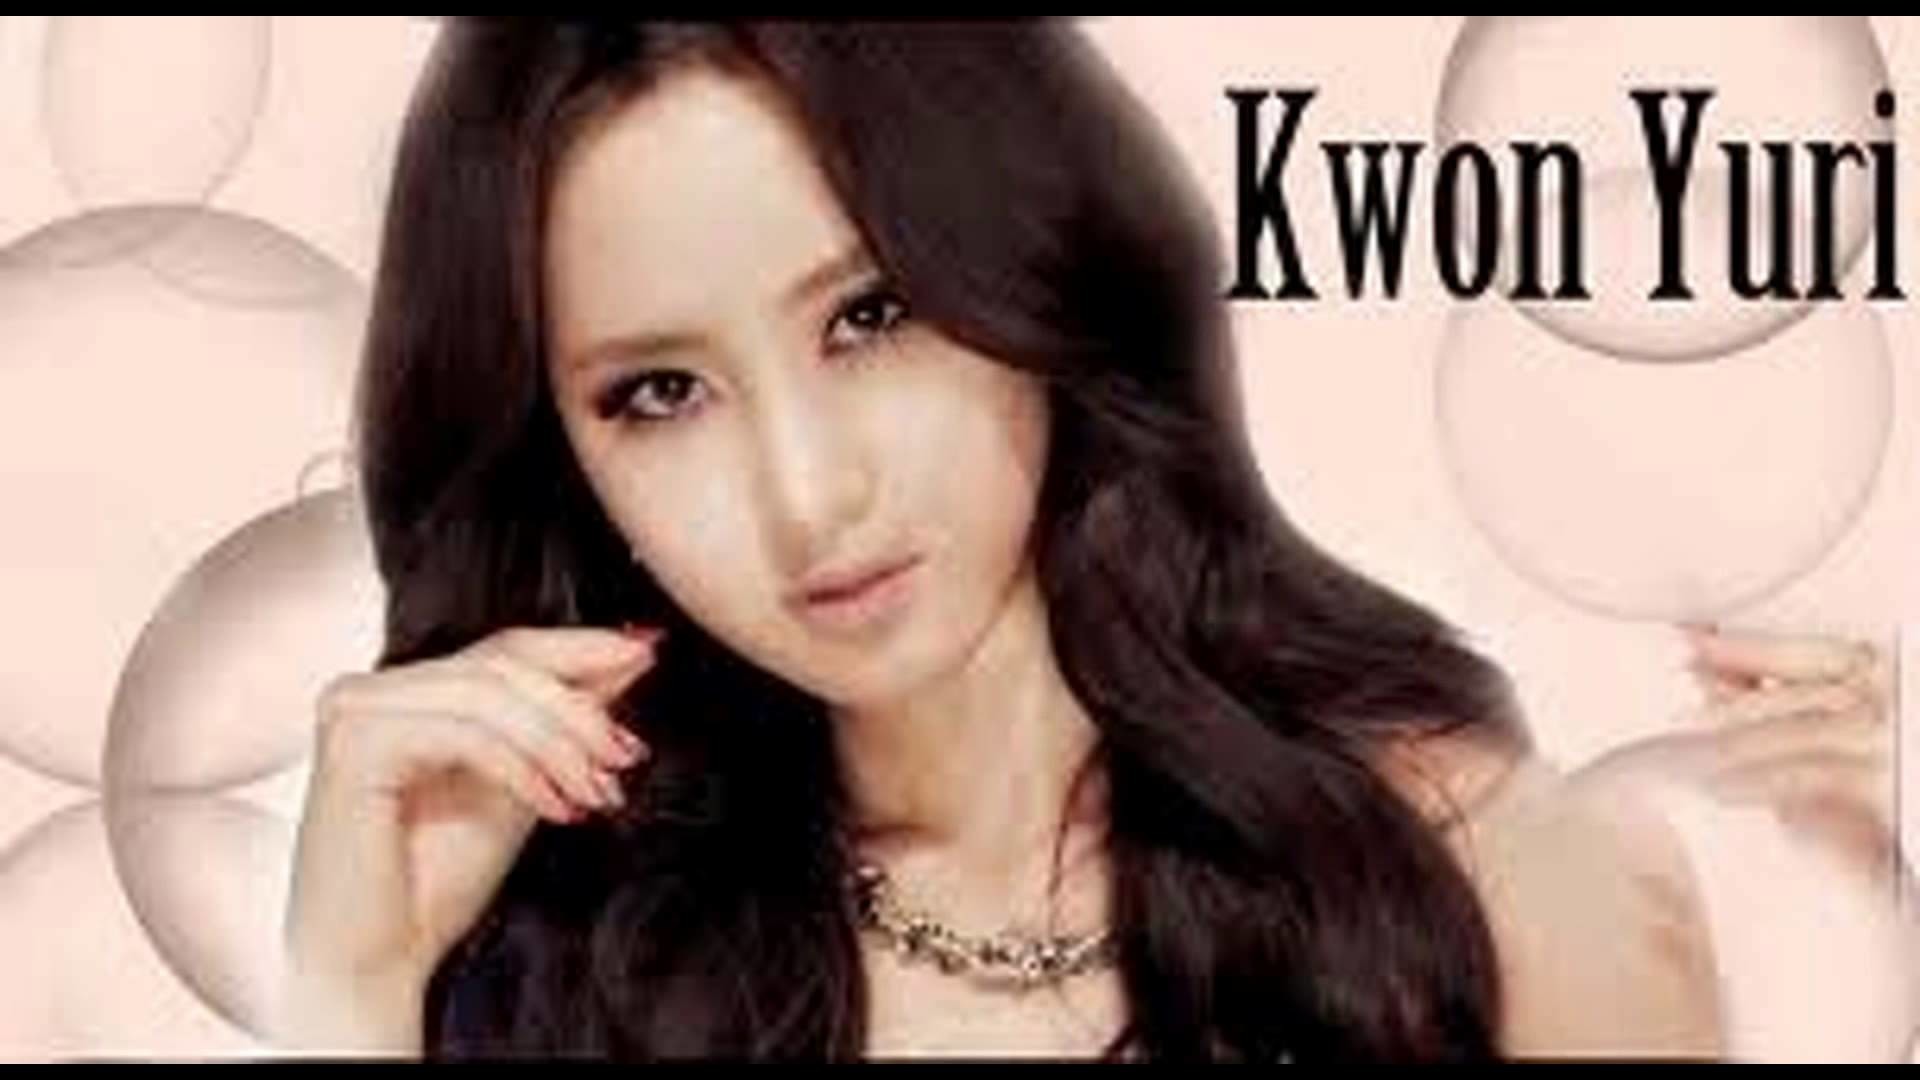 1920x1080 Girls' Generation Member's Profile: Kwon Yuri